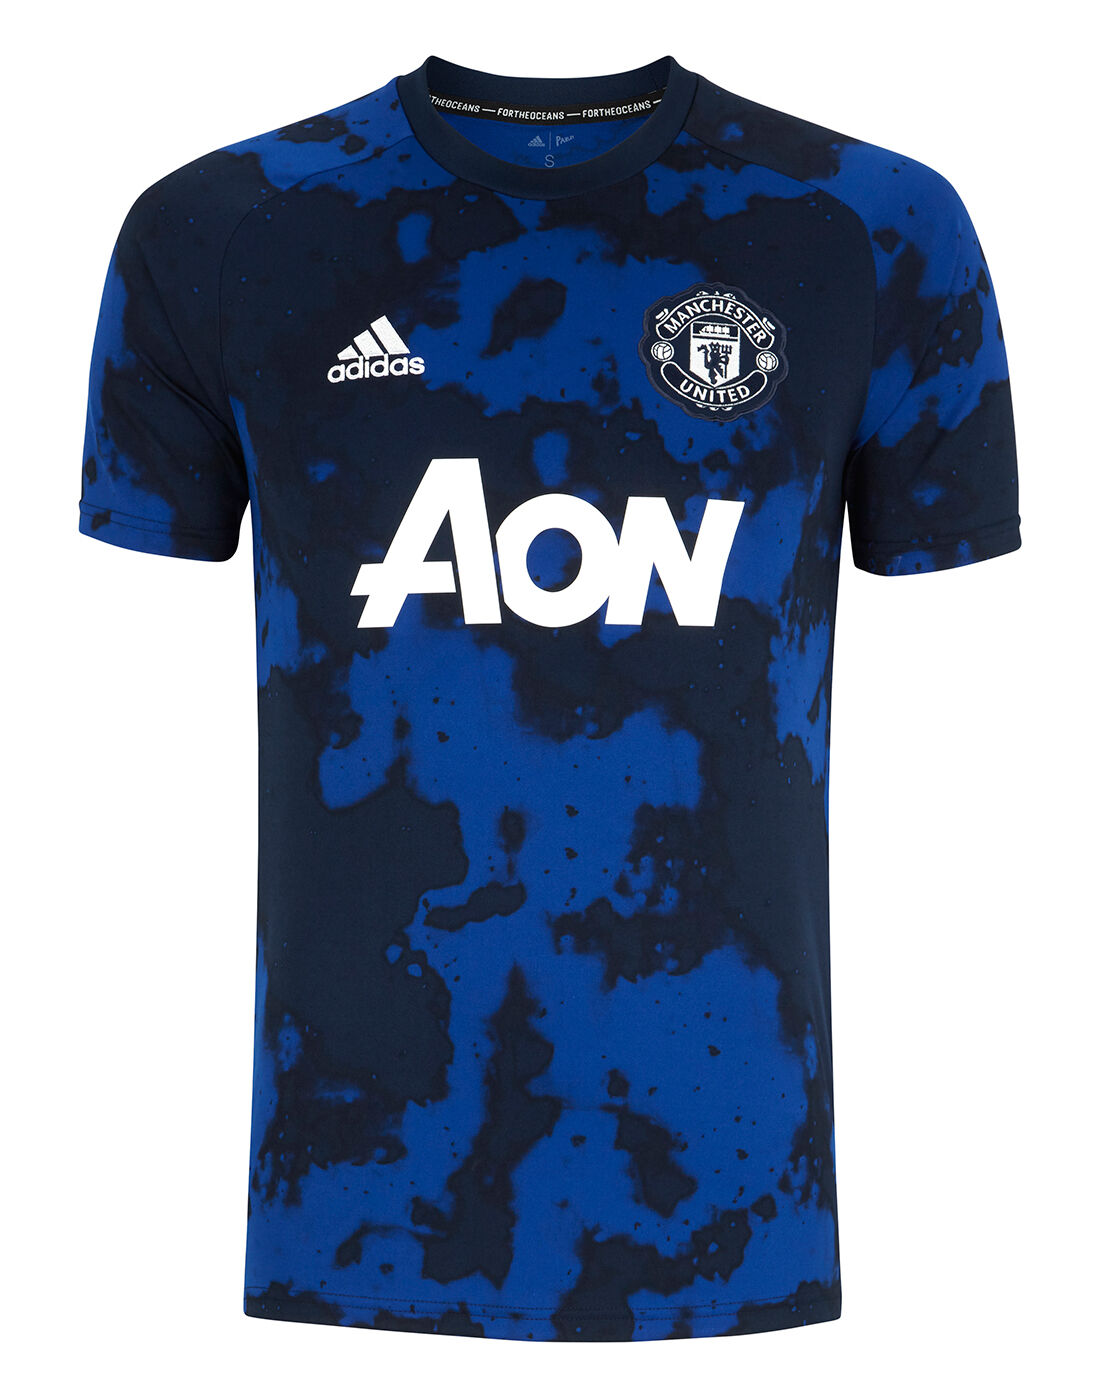 man united blue jersey